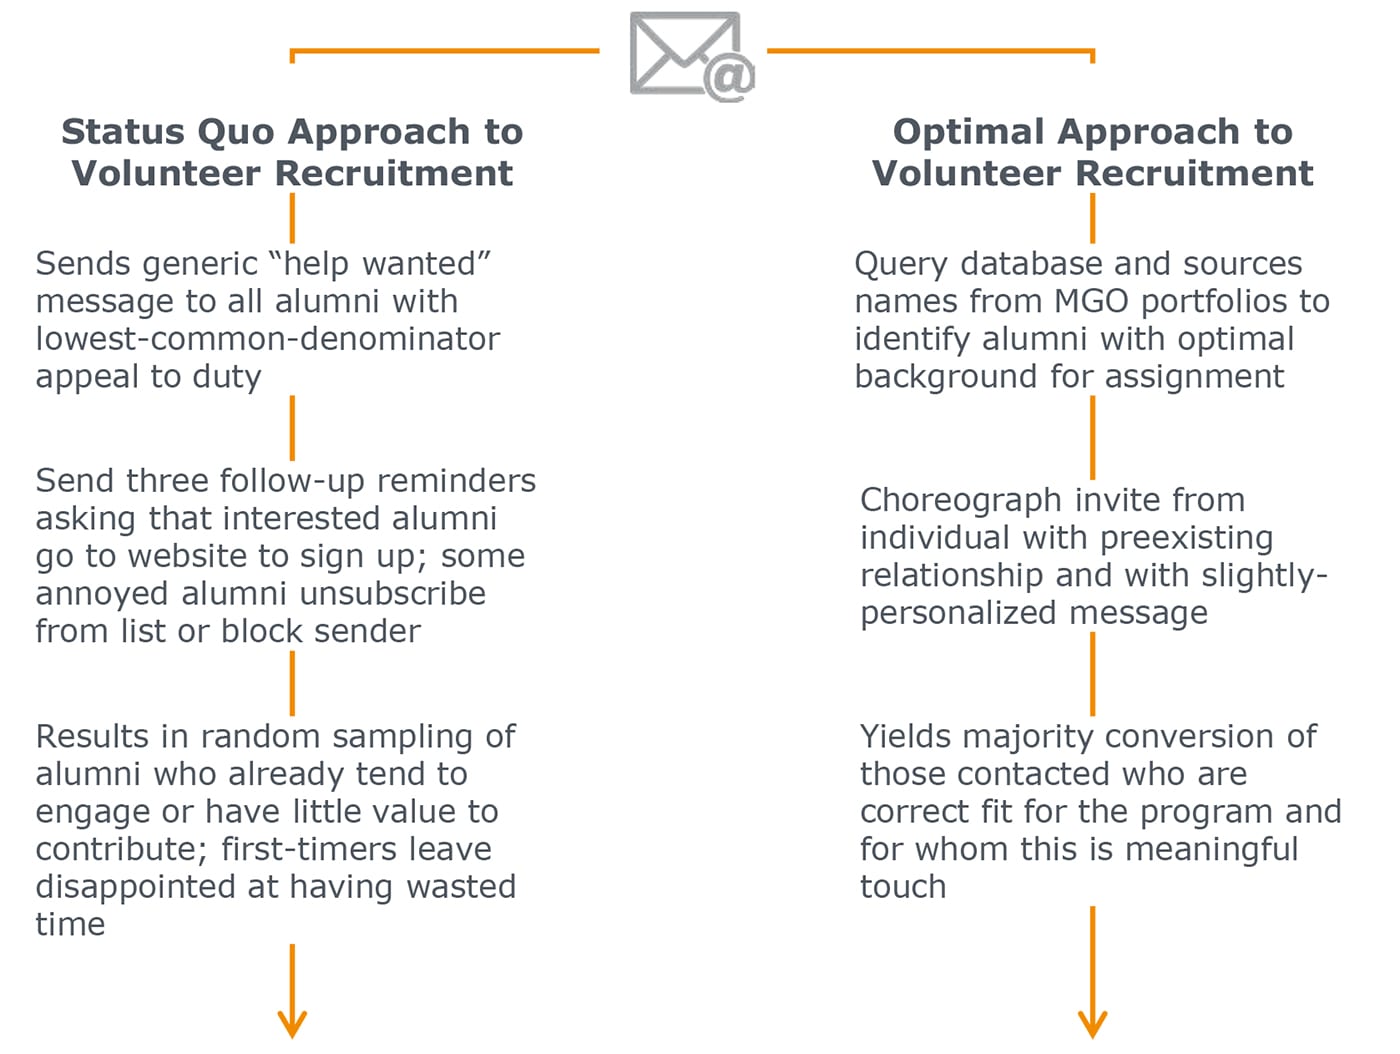 Status Quo vs. Optimal Approach to Volunteer Recruitment